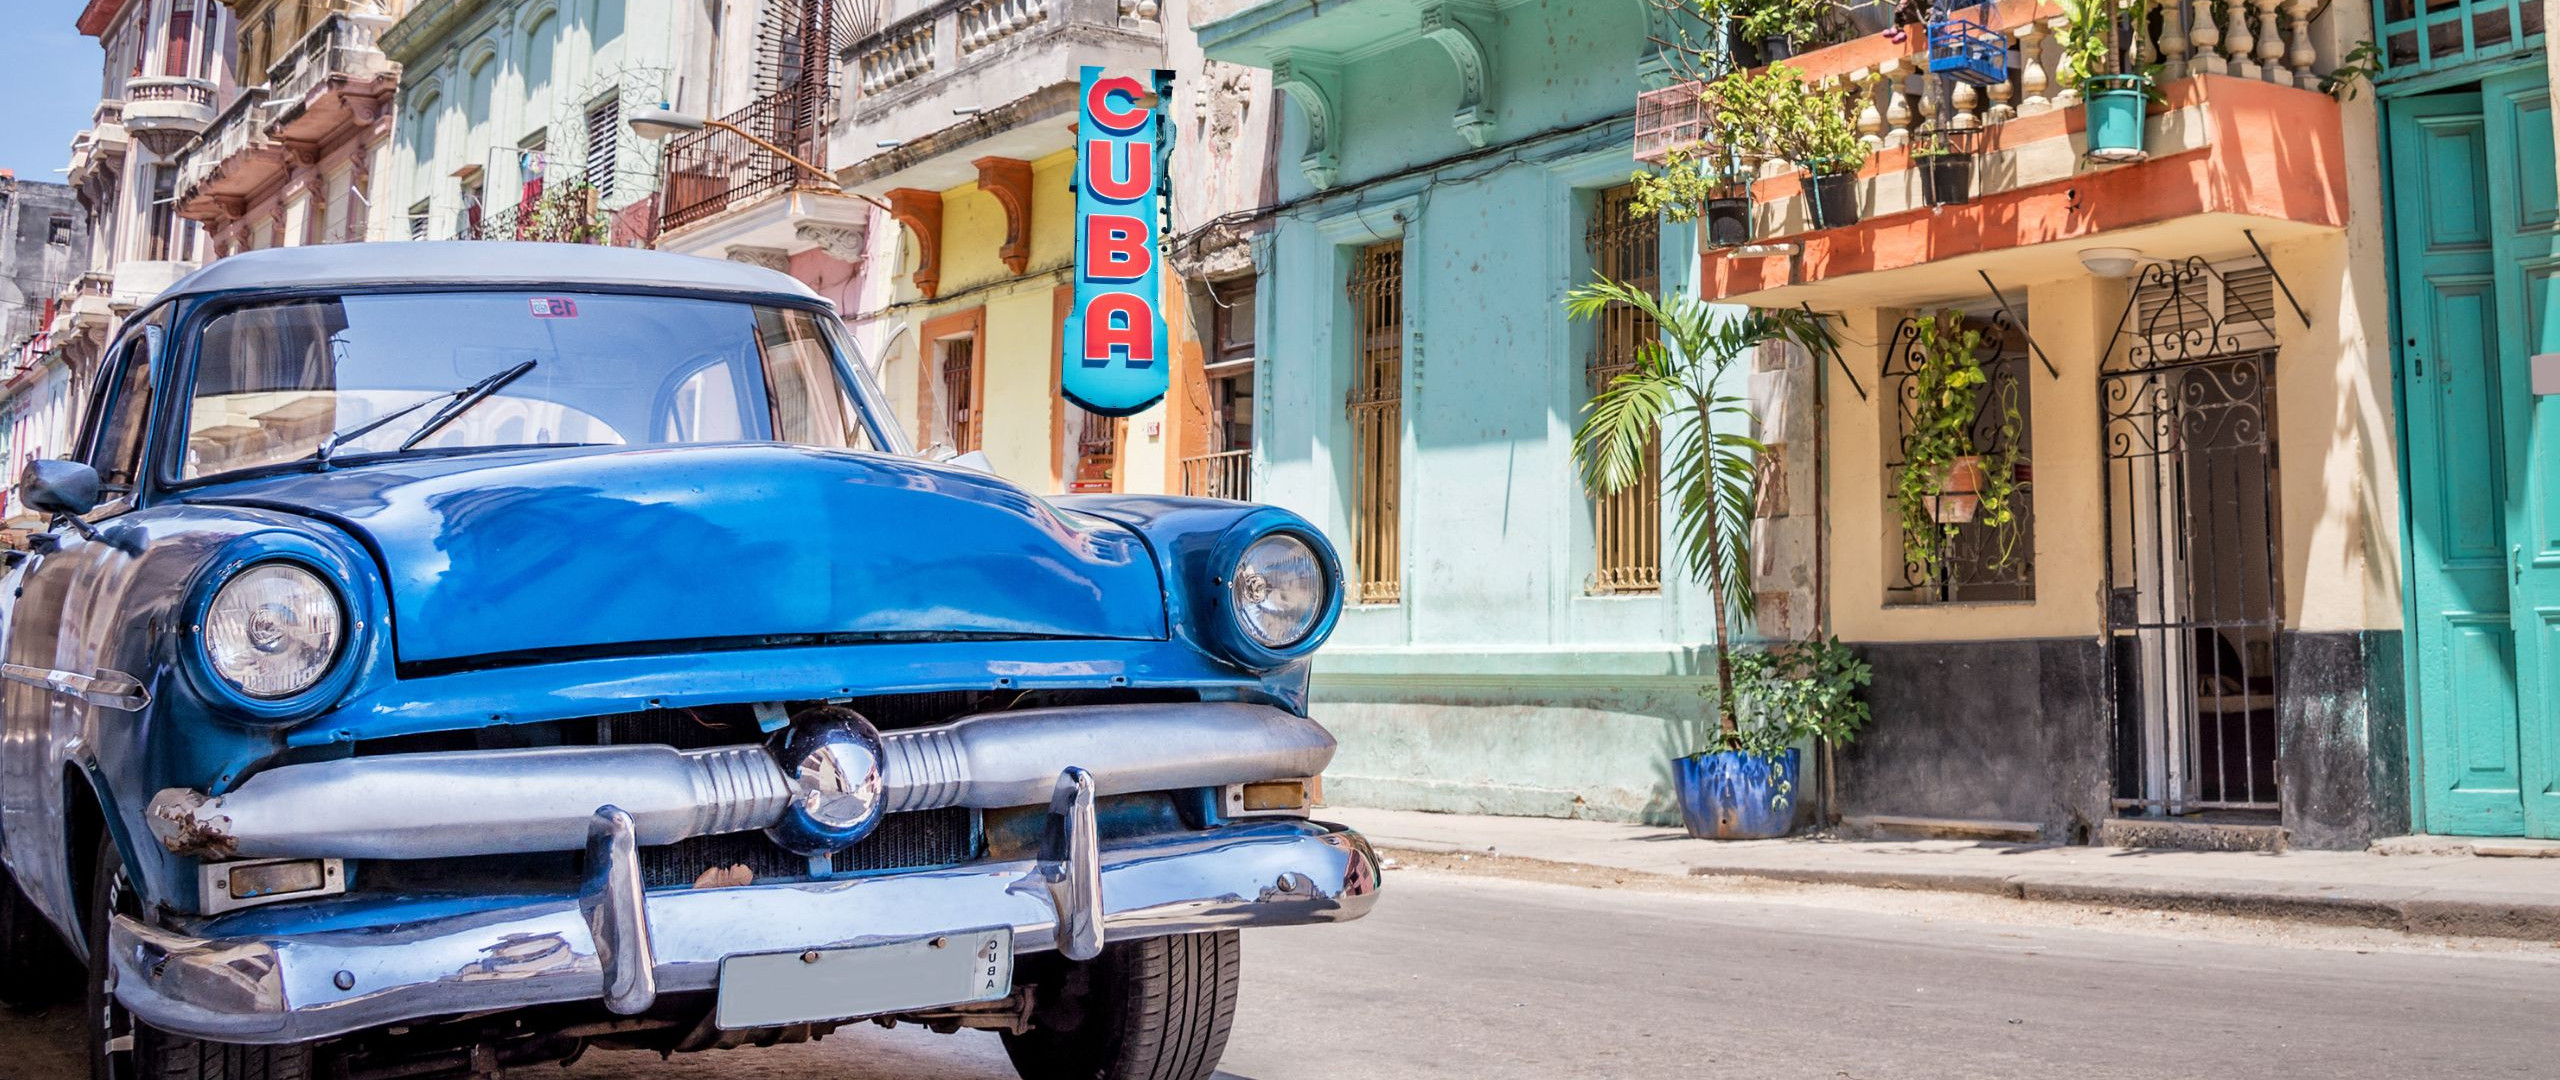 Bunte Autos in Kuba